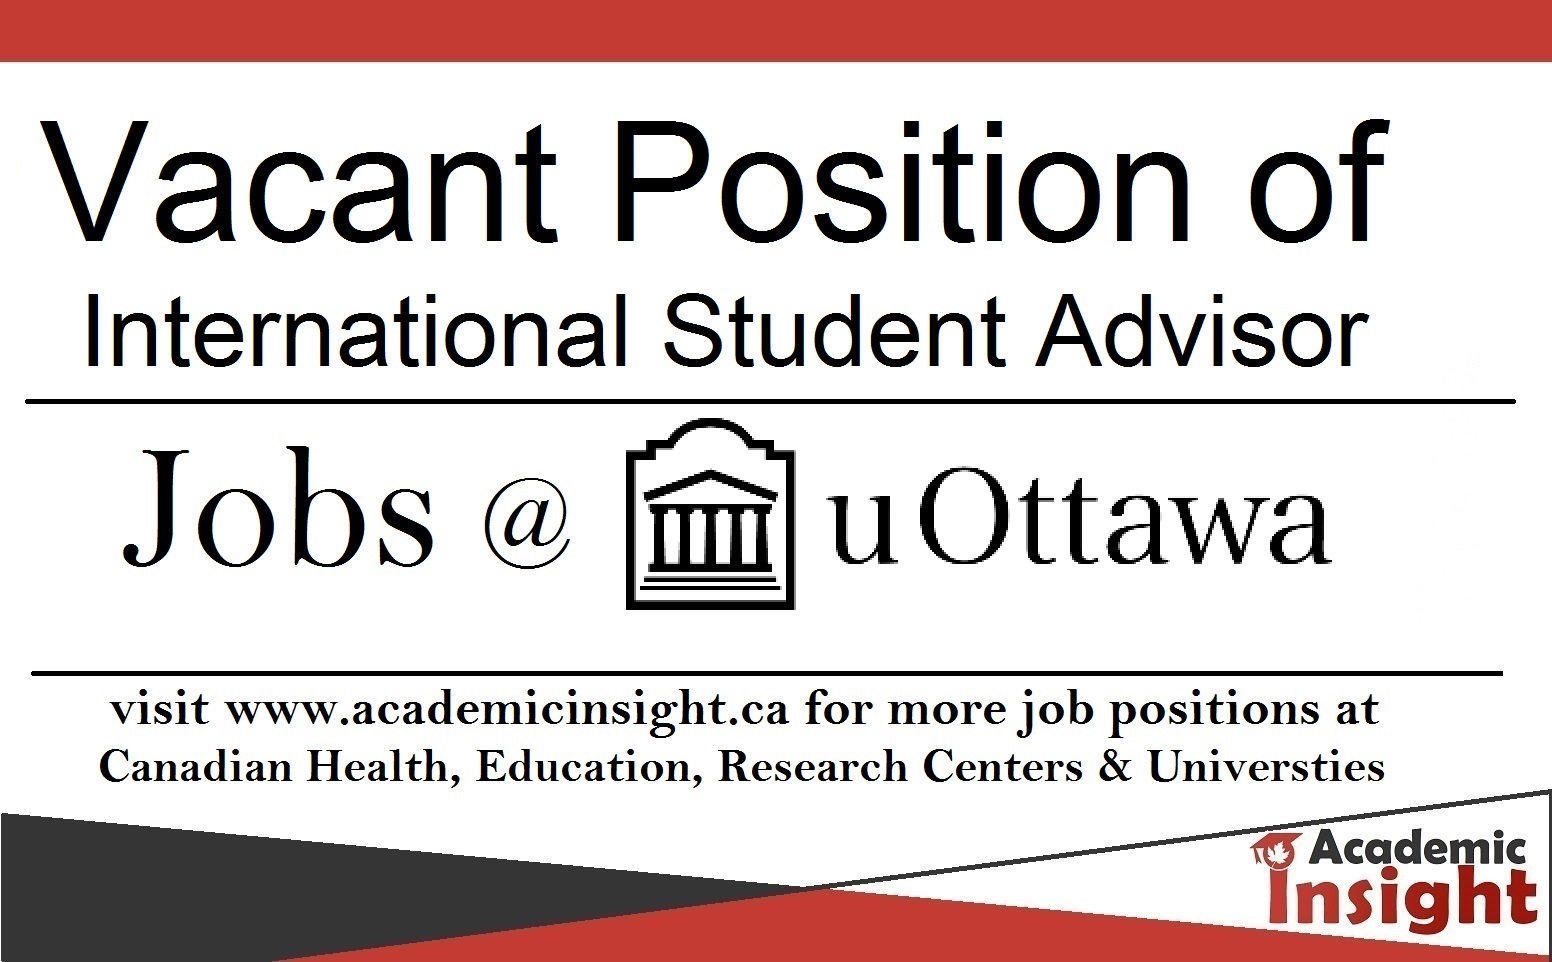 Vacancy of International Student Advisor at the University of Ottawa